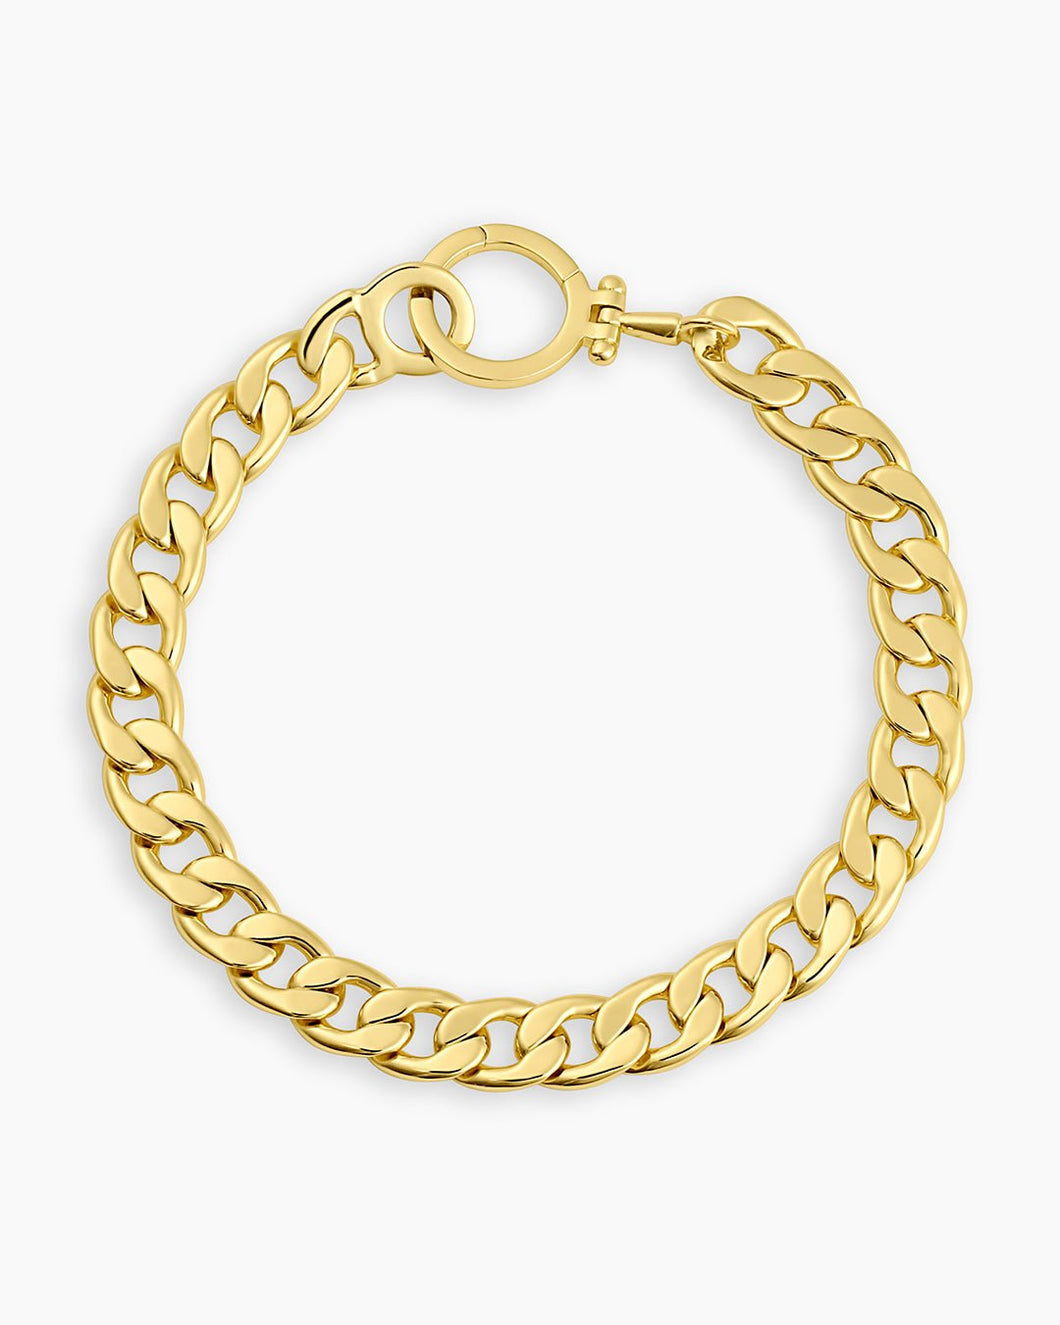 GOR Wilder Chain Bracelet